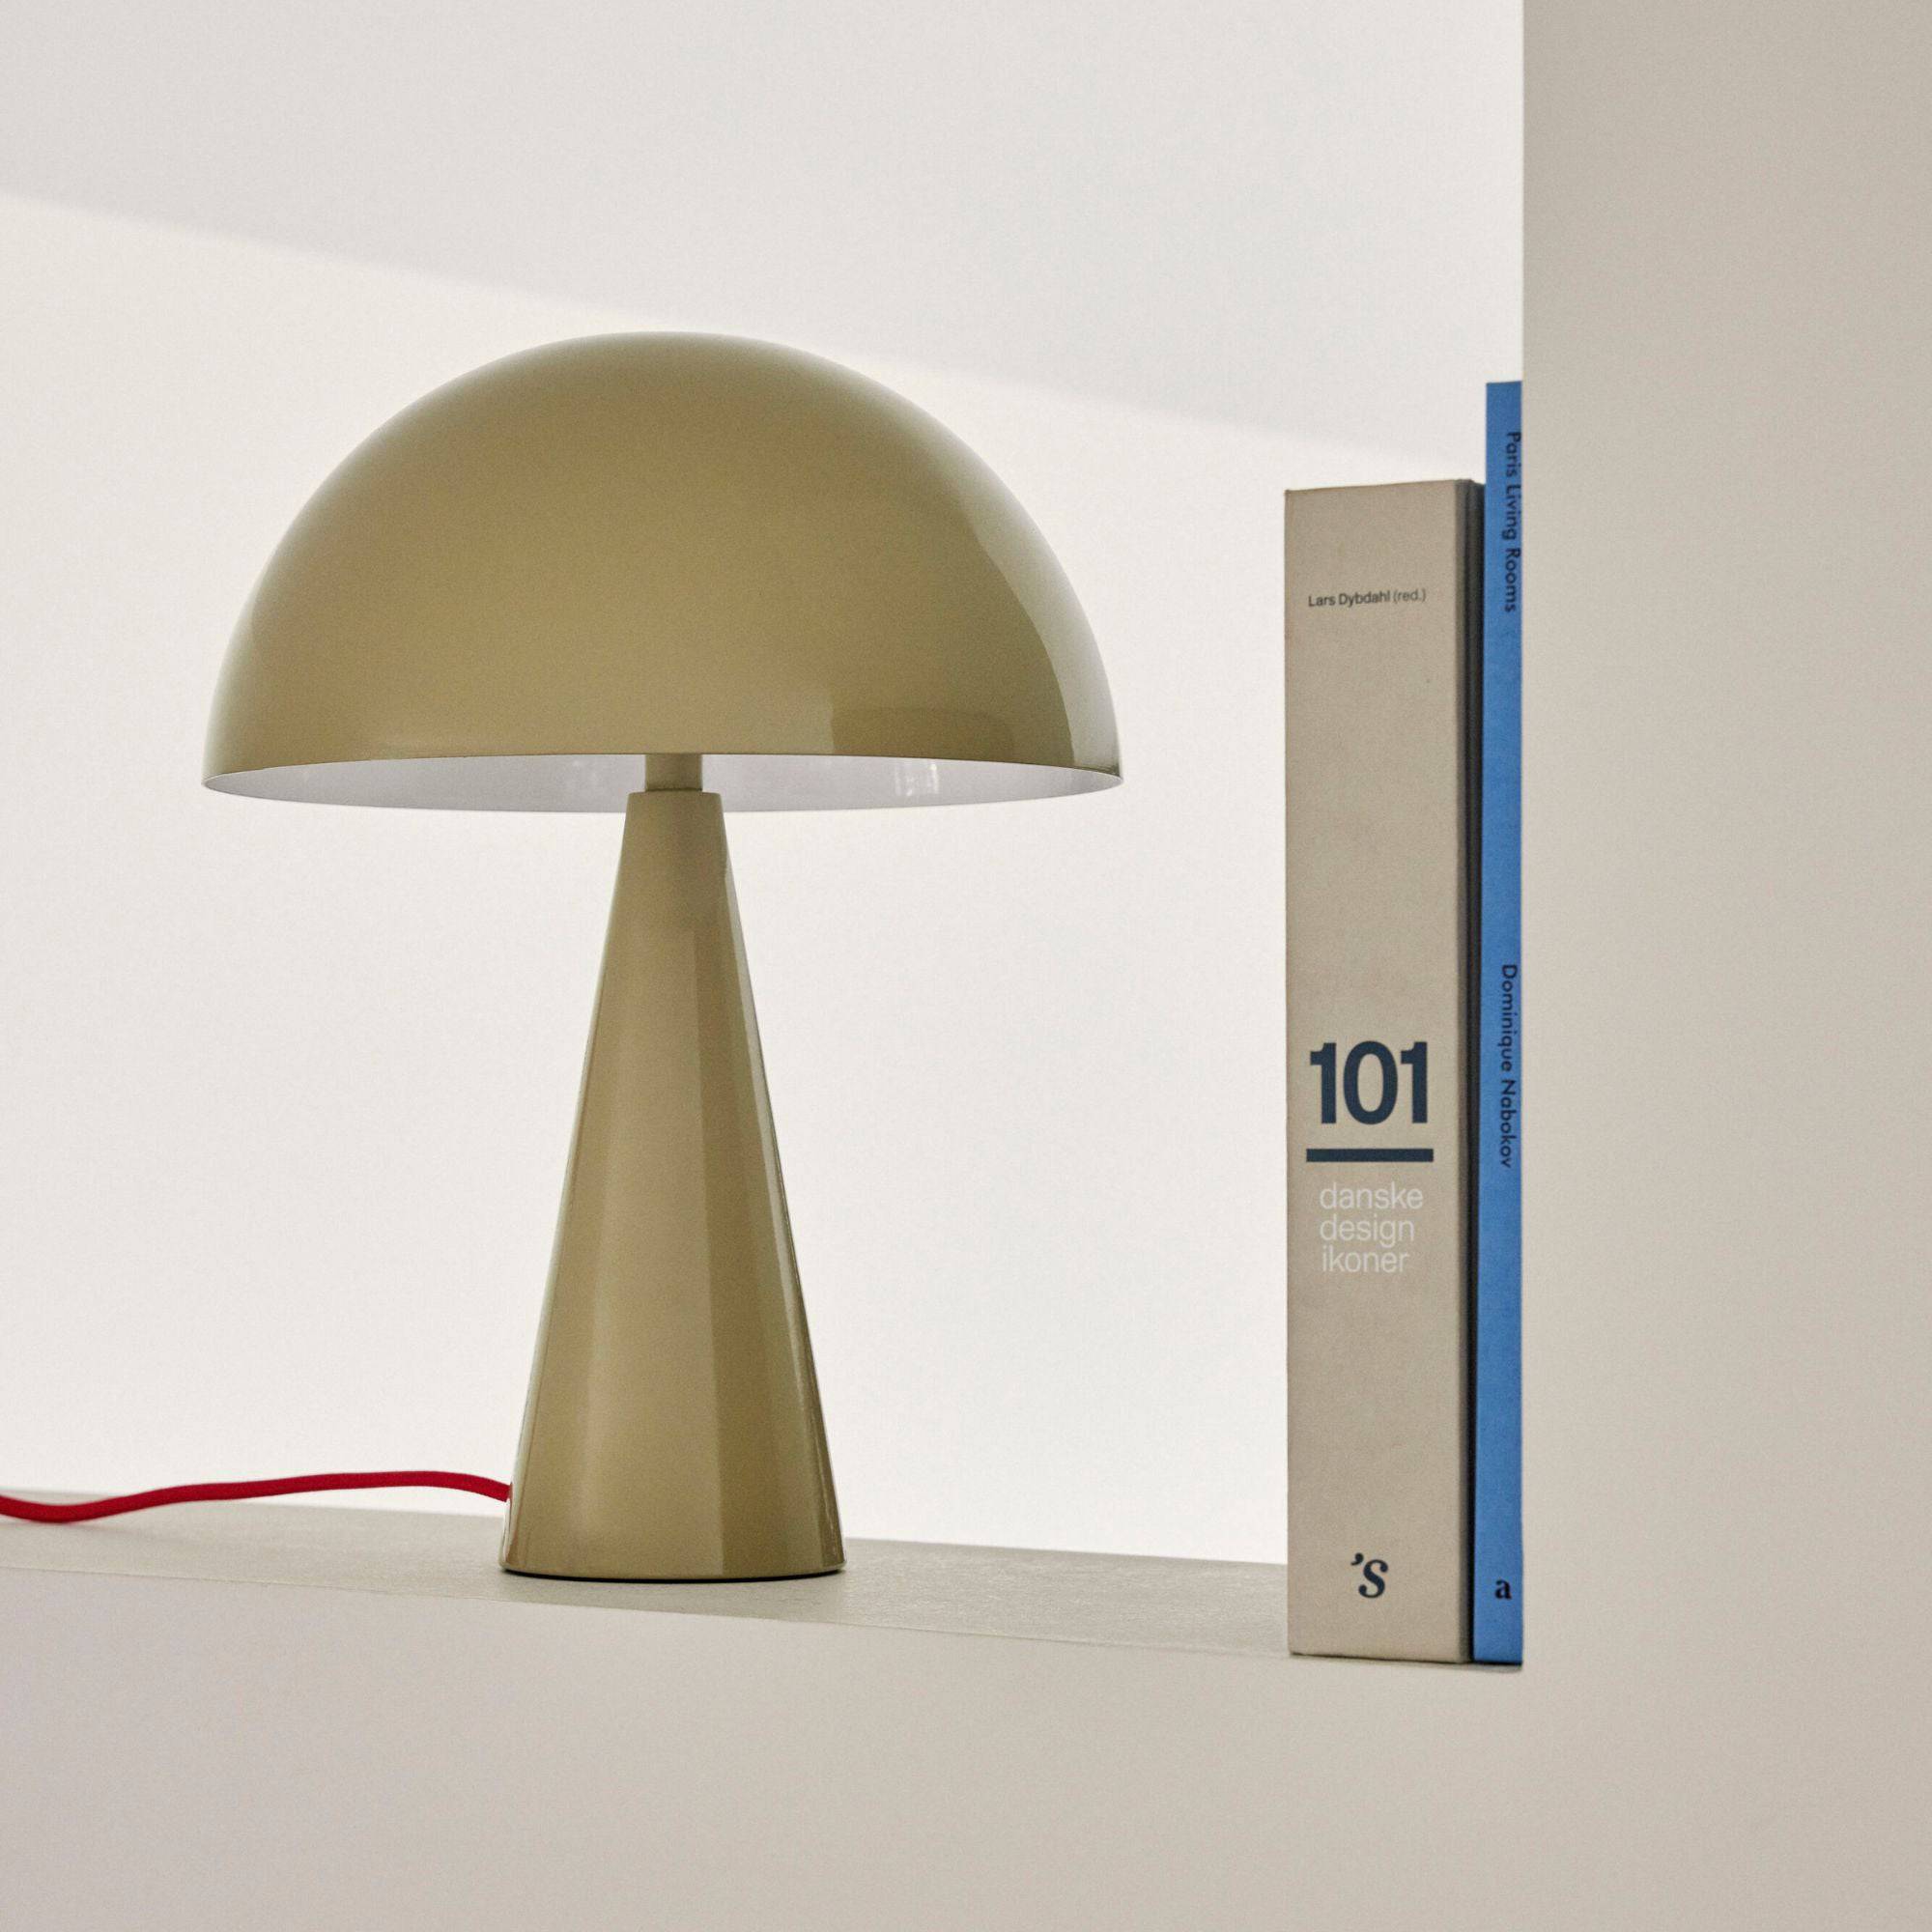 Mushroom Table Lamp | Sand - THAT COOL LIVING